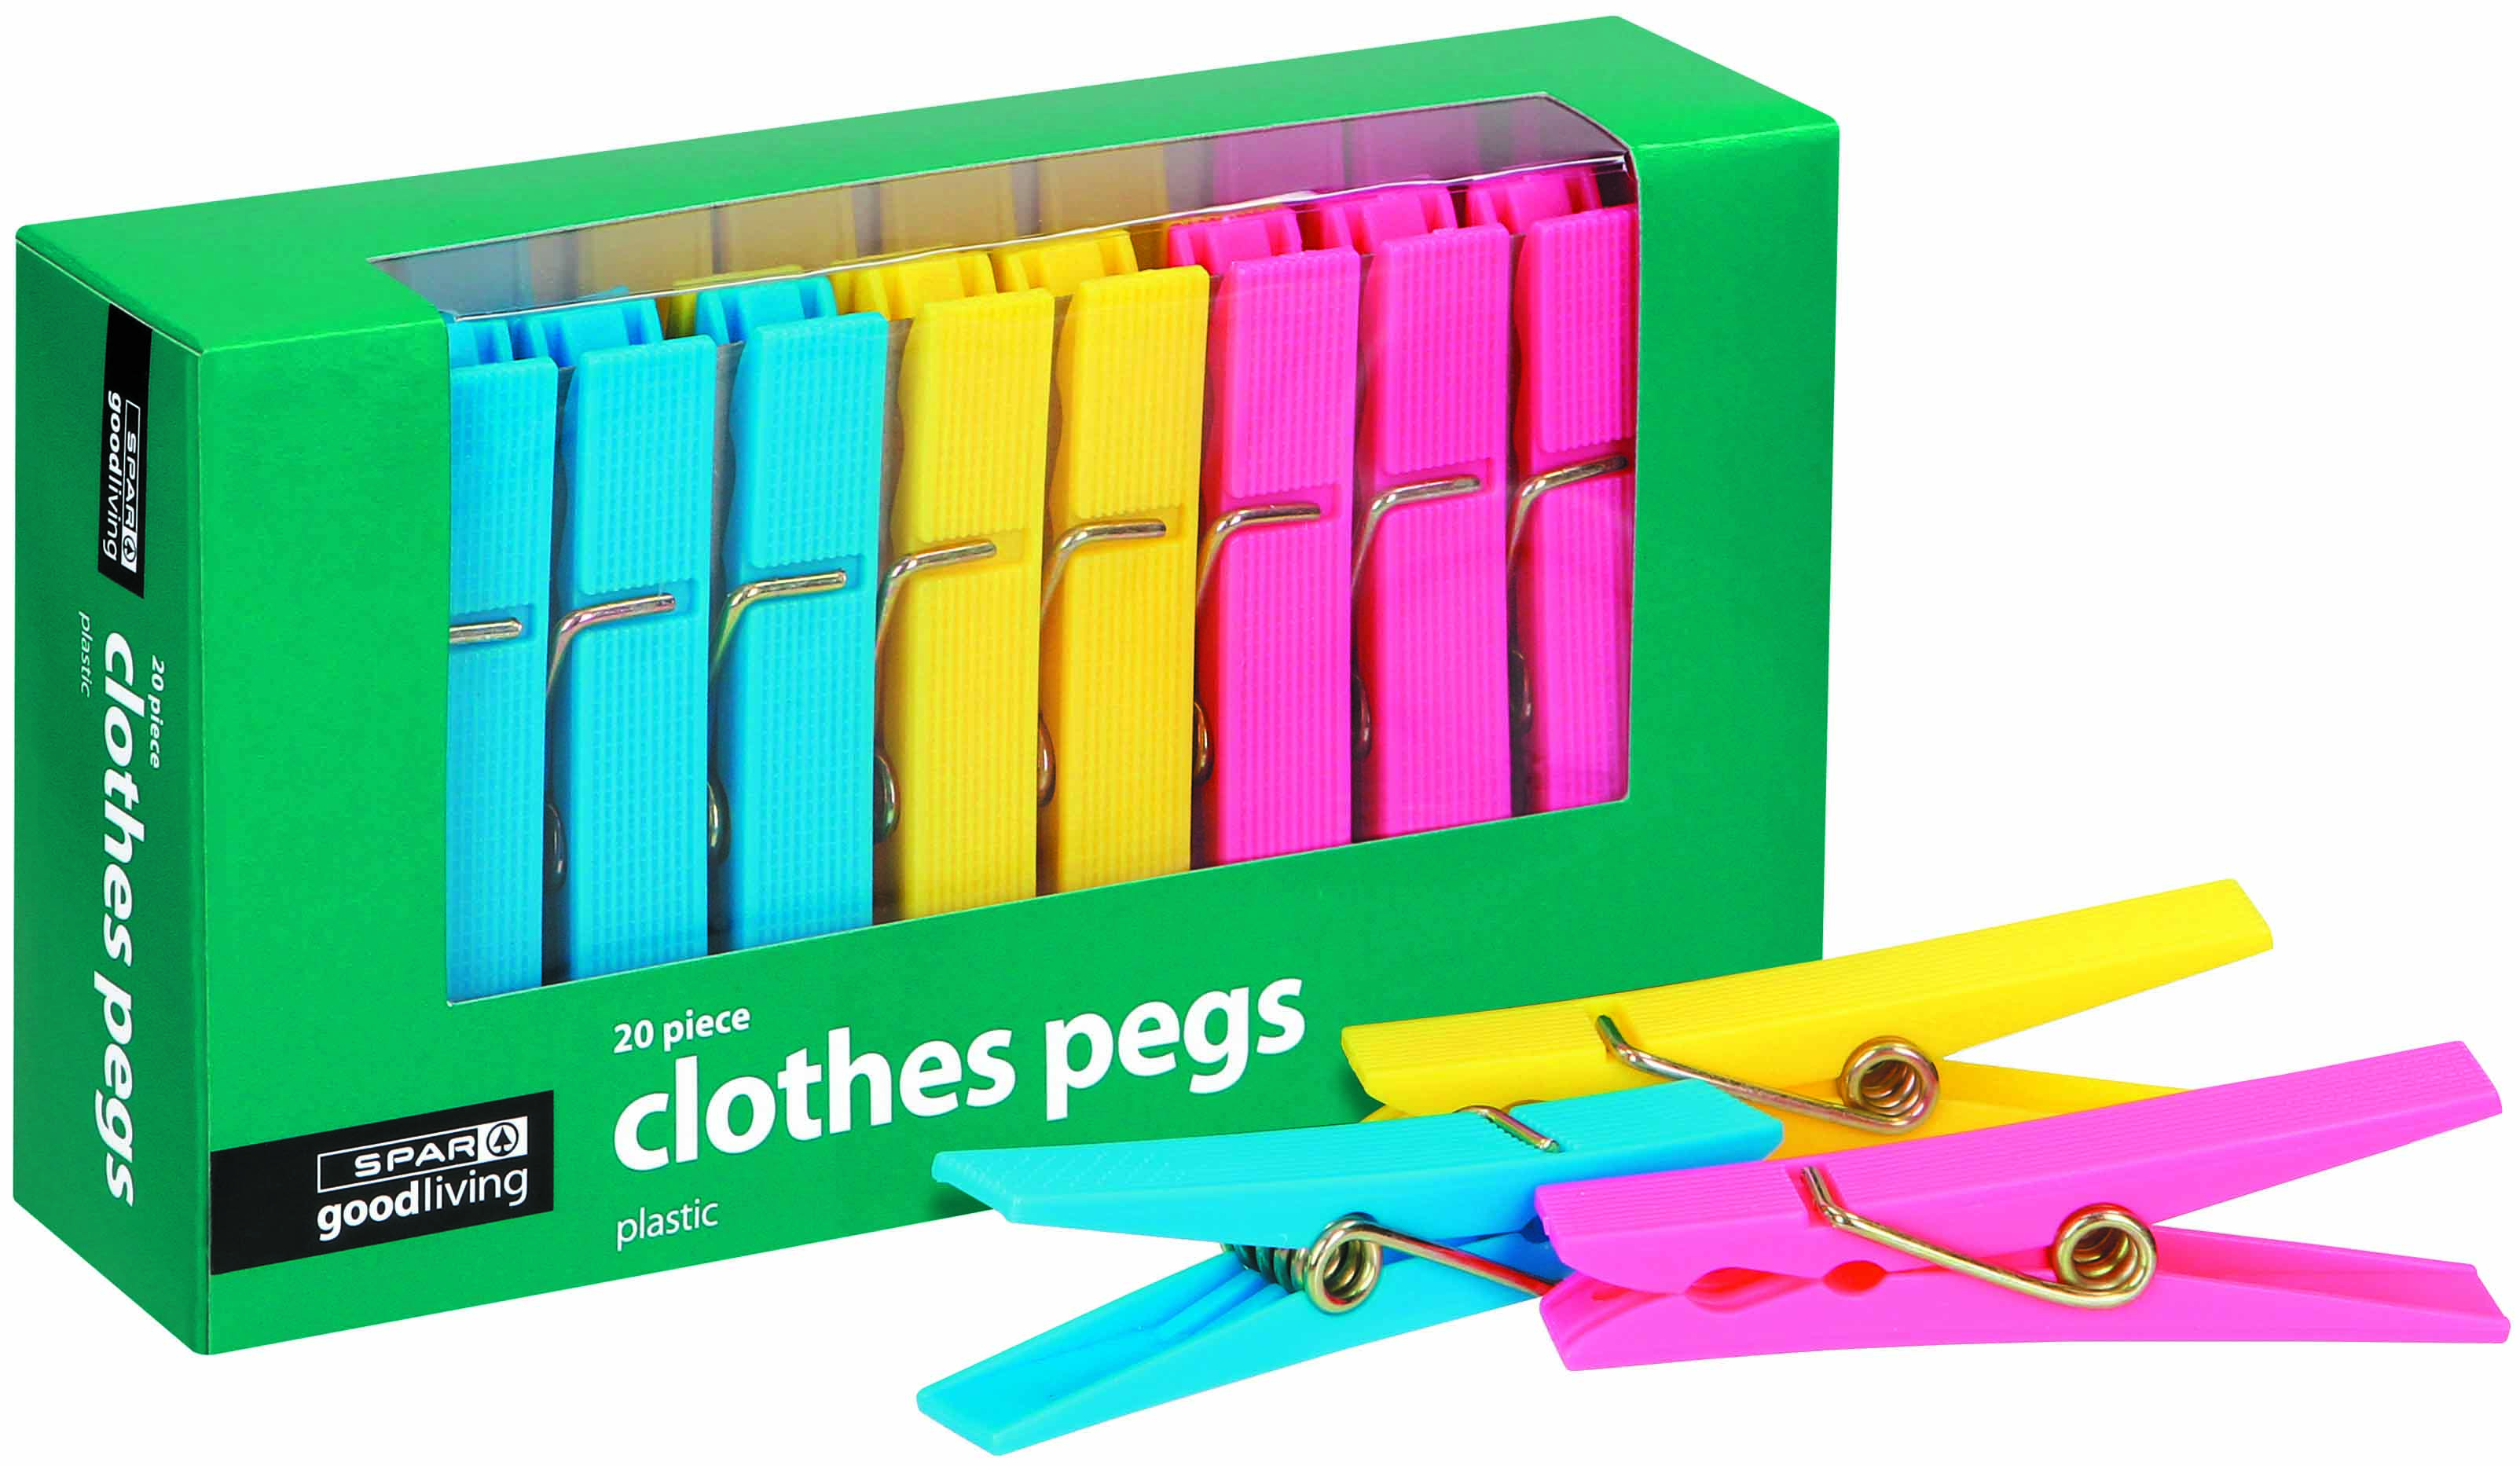 clothes pegs plastic 20 piece